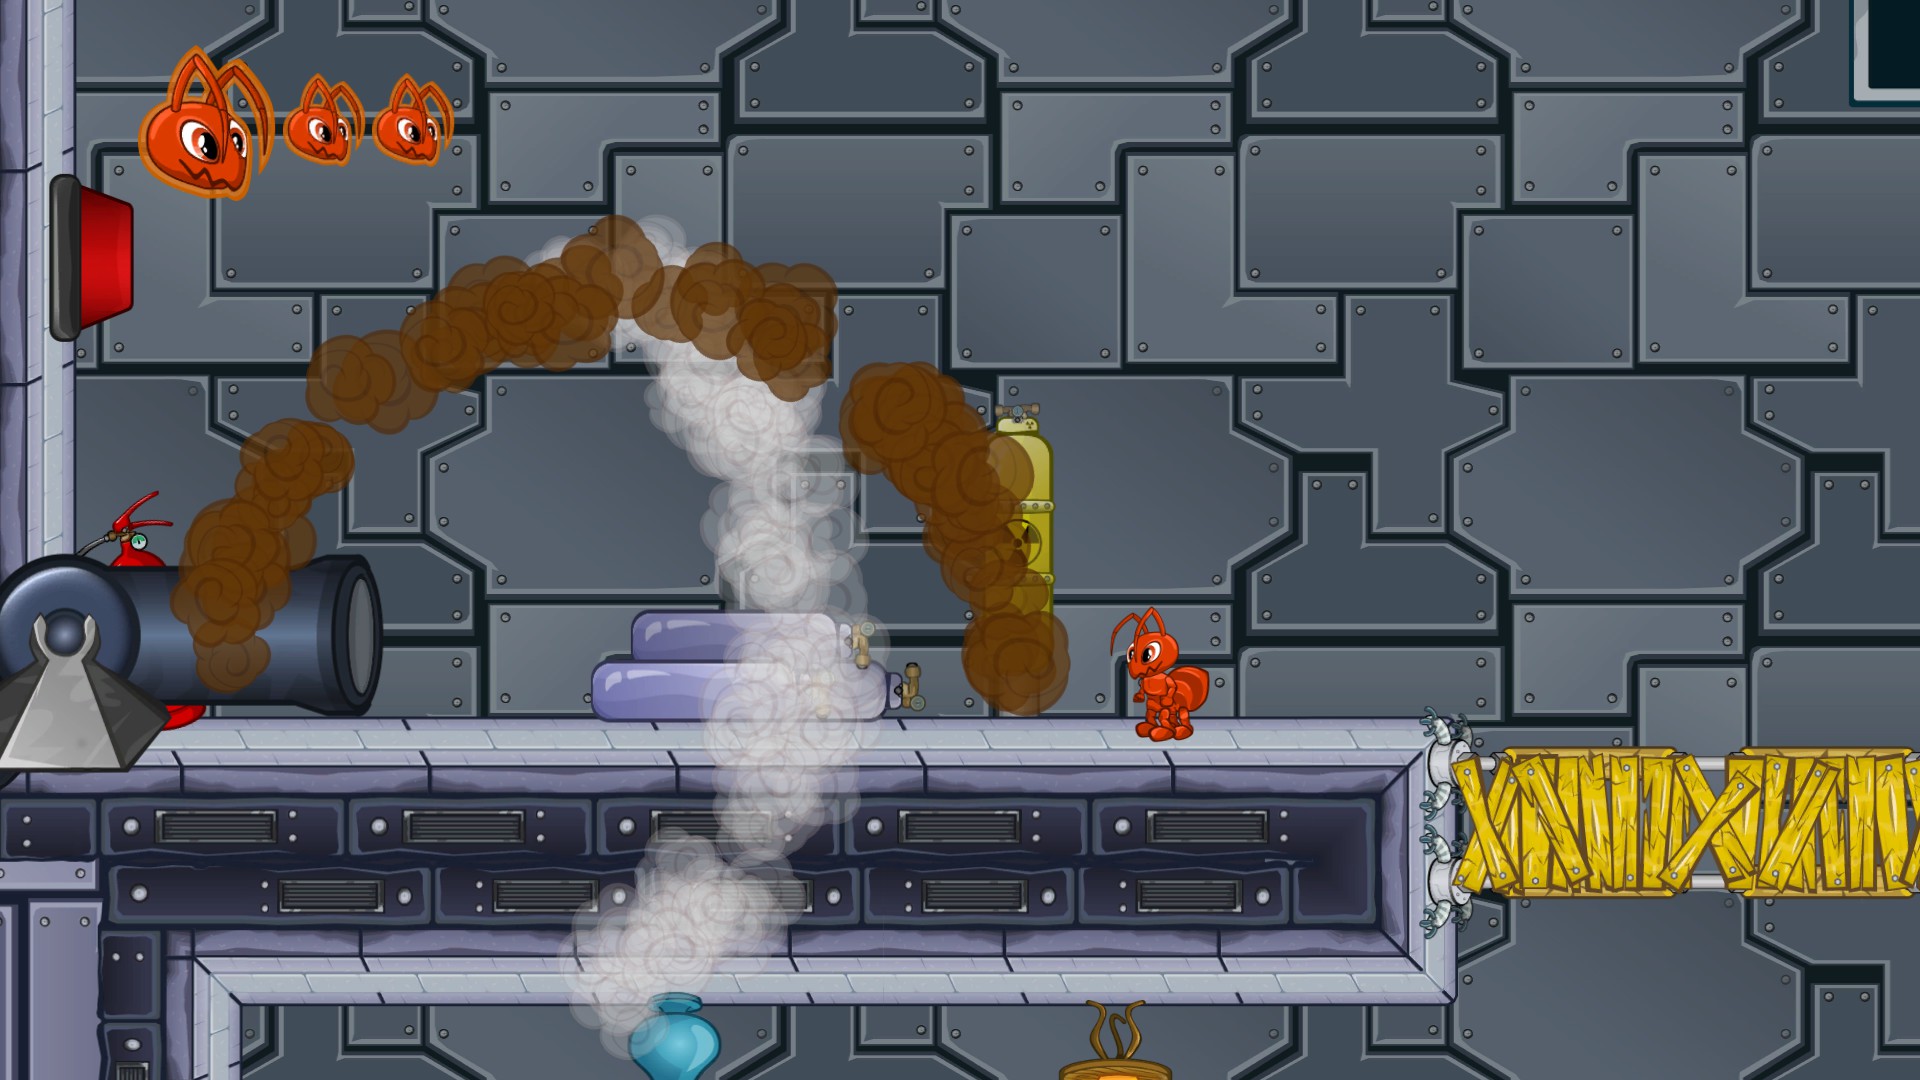 Ant-gravity: Tiny's Adventure screenshot